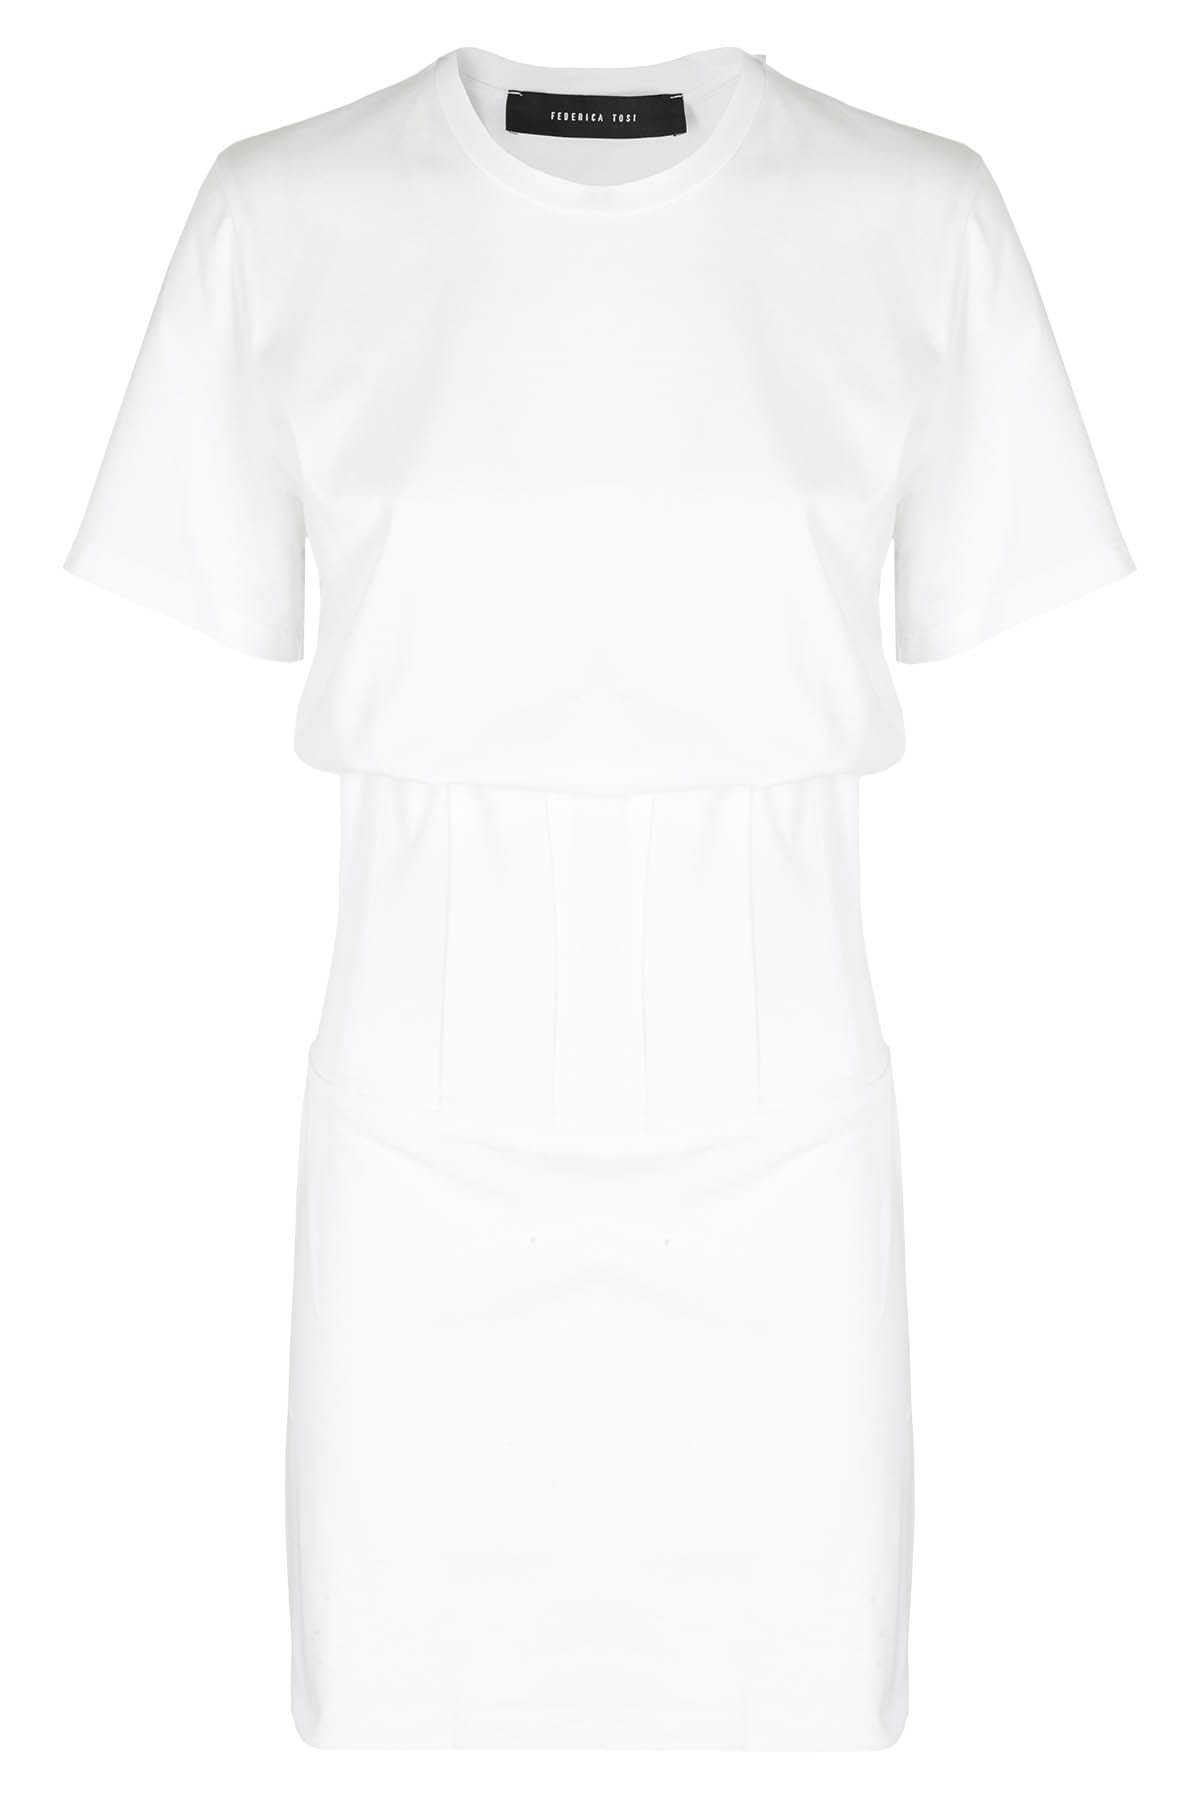 Federica Tosi Dress In Bianco